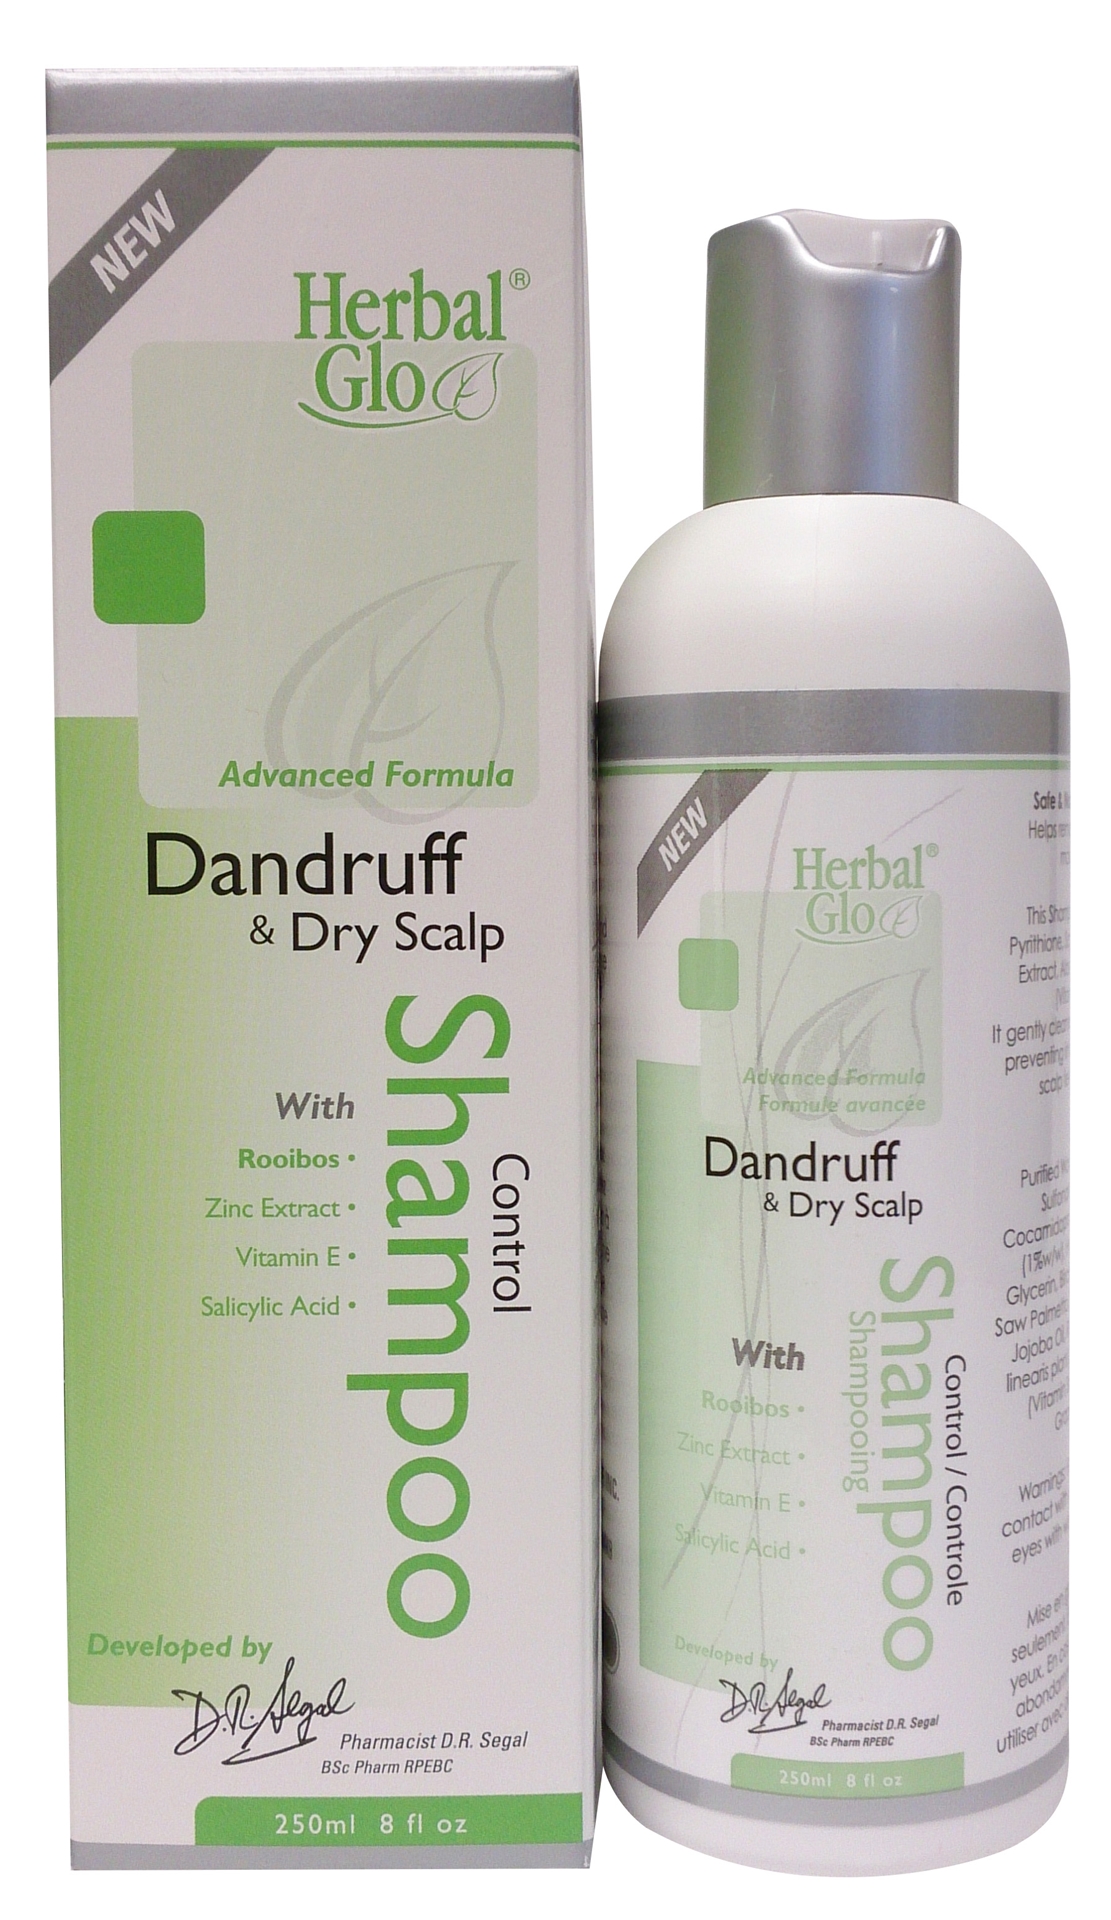 Buy Herbal Glo Dandruff/Dry Scalp Shampoo Online | BuyWell.com - Canada's online vitamin, beauty &